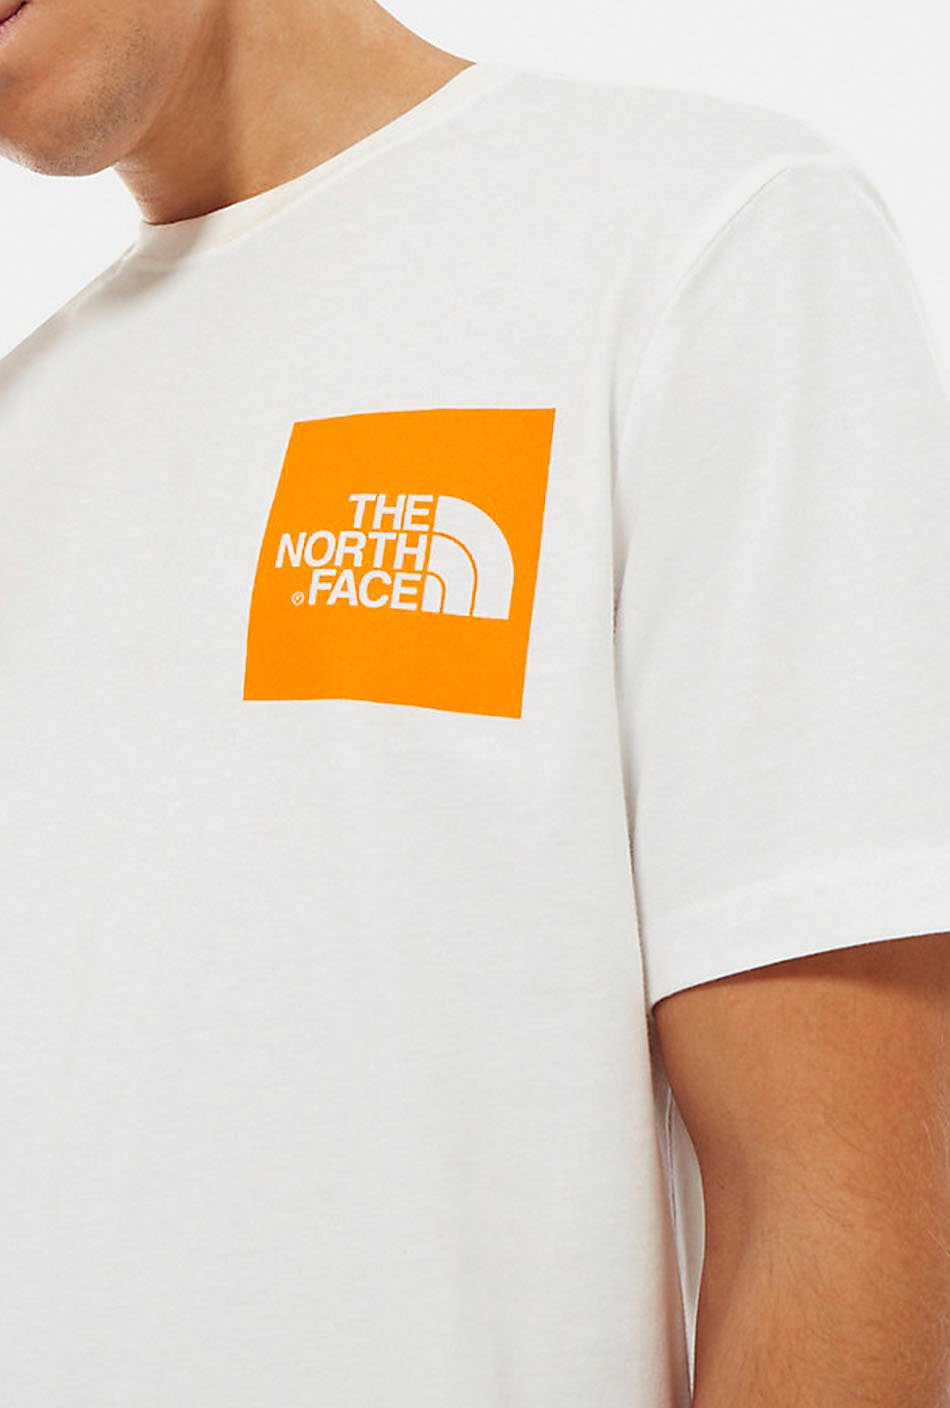 Camiseta The North Face Fine White/Flame Orange